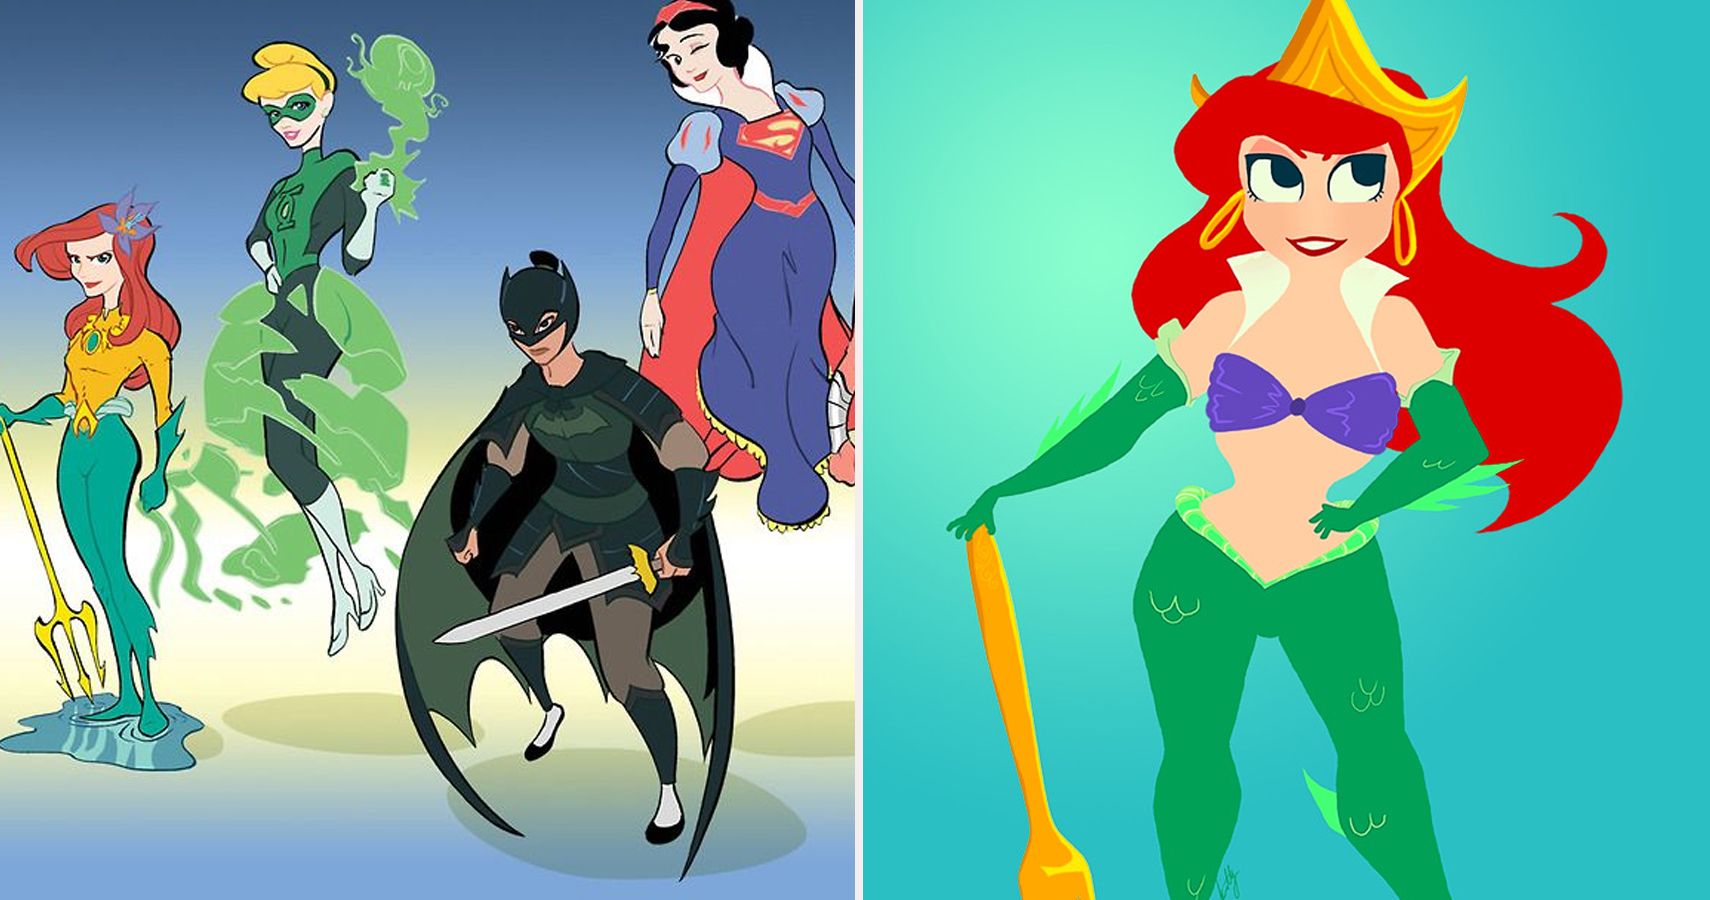 disney princesses reimagined as superheroes